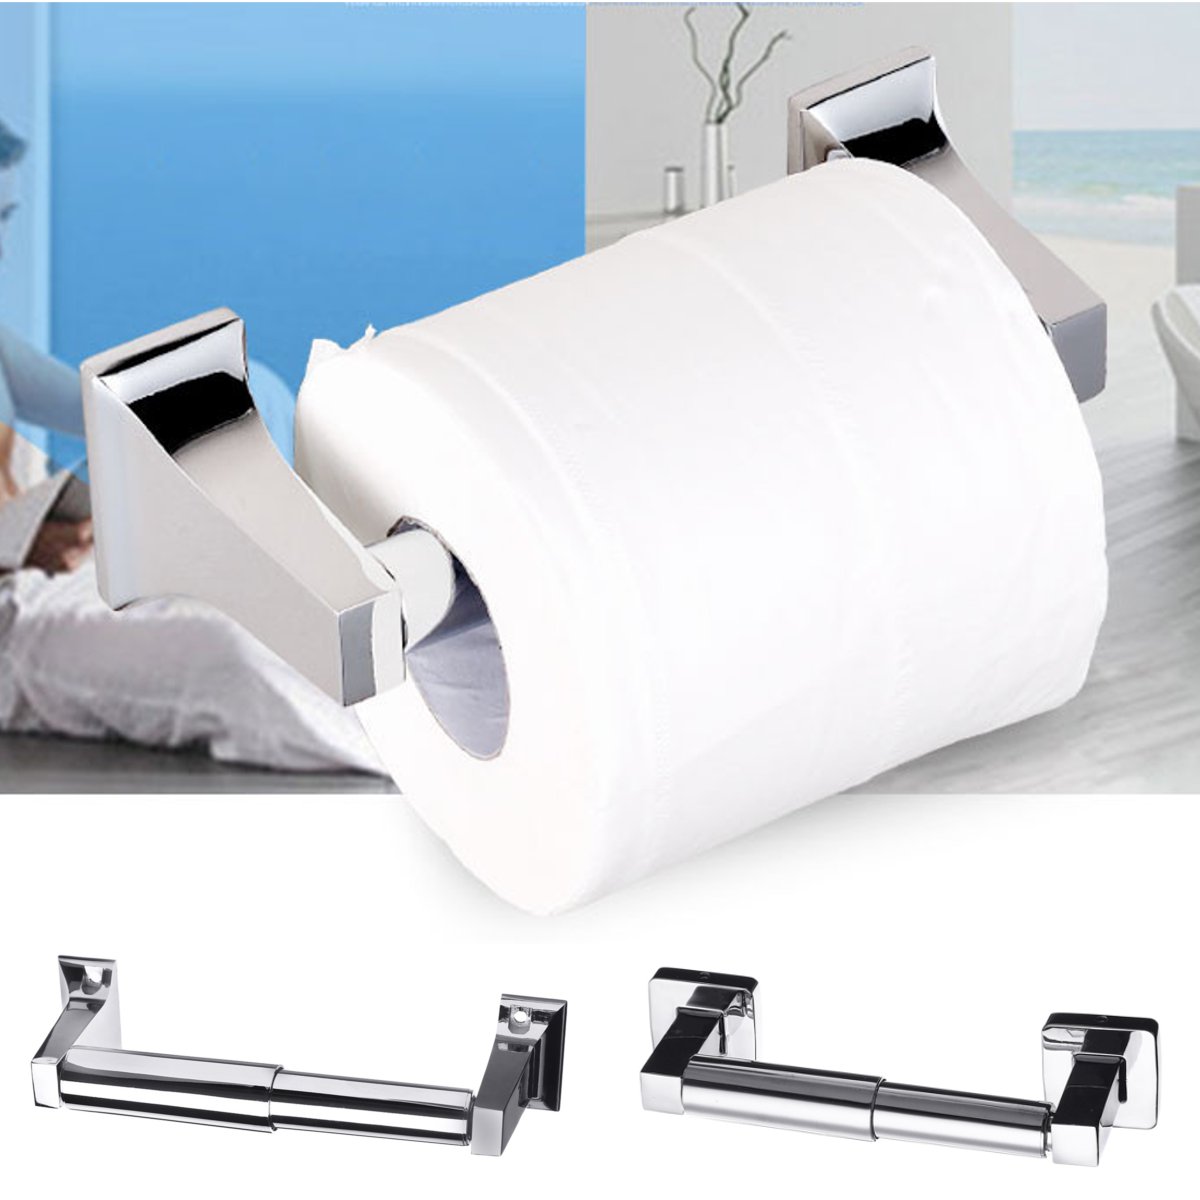 Aluminum-Alloy-Roll-Paper-Shelf-Holder-Telescopic-Tissue-Storage-Organizer-1598369-1